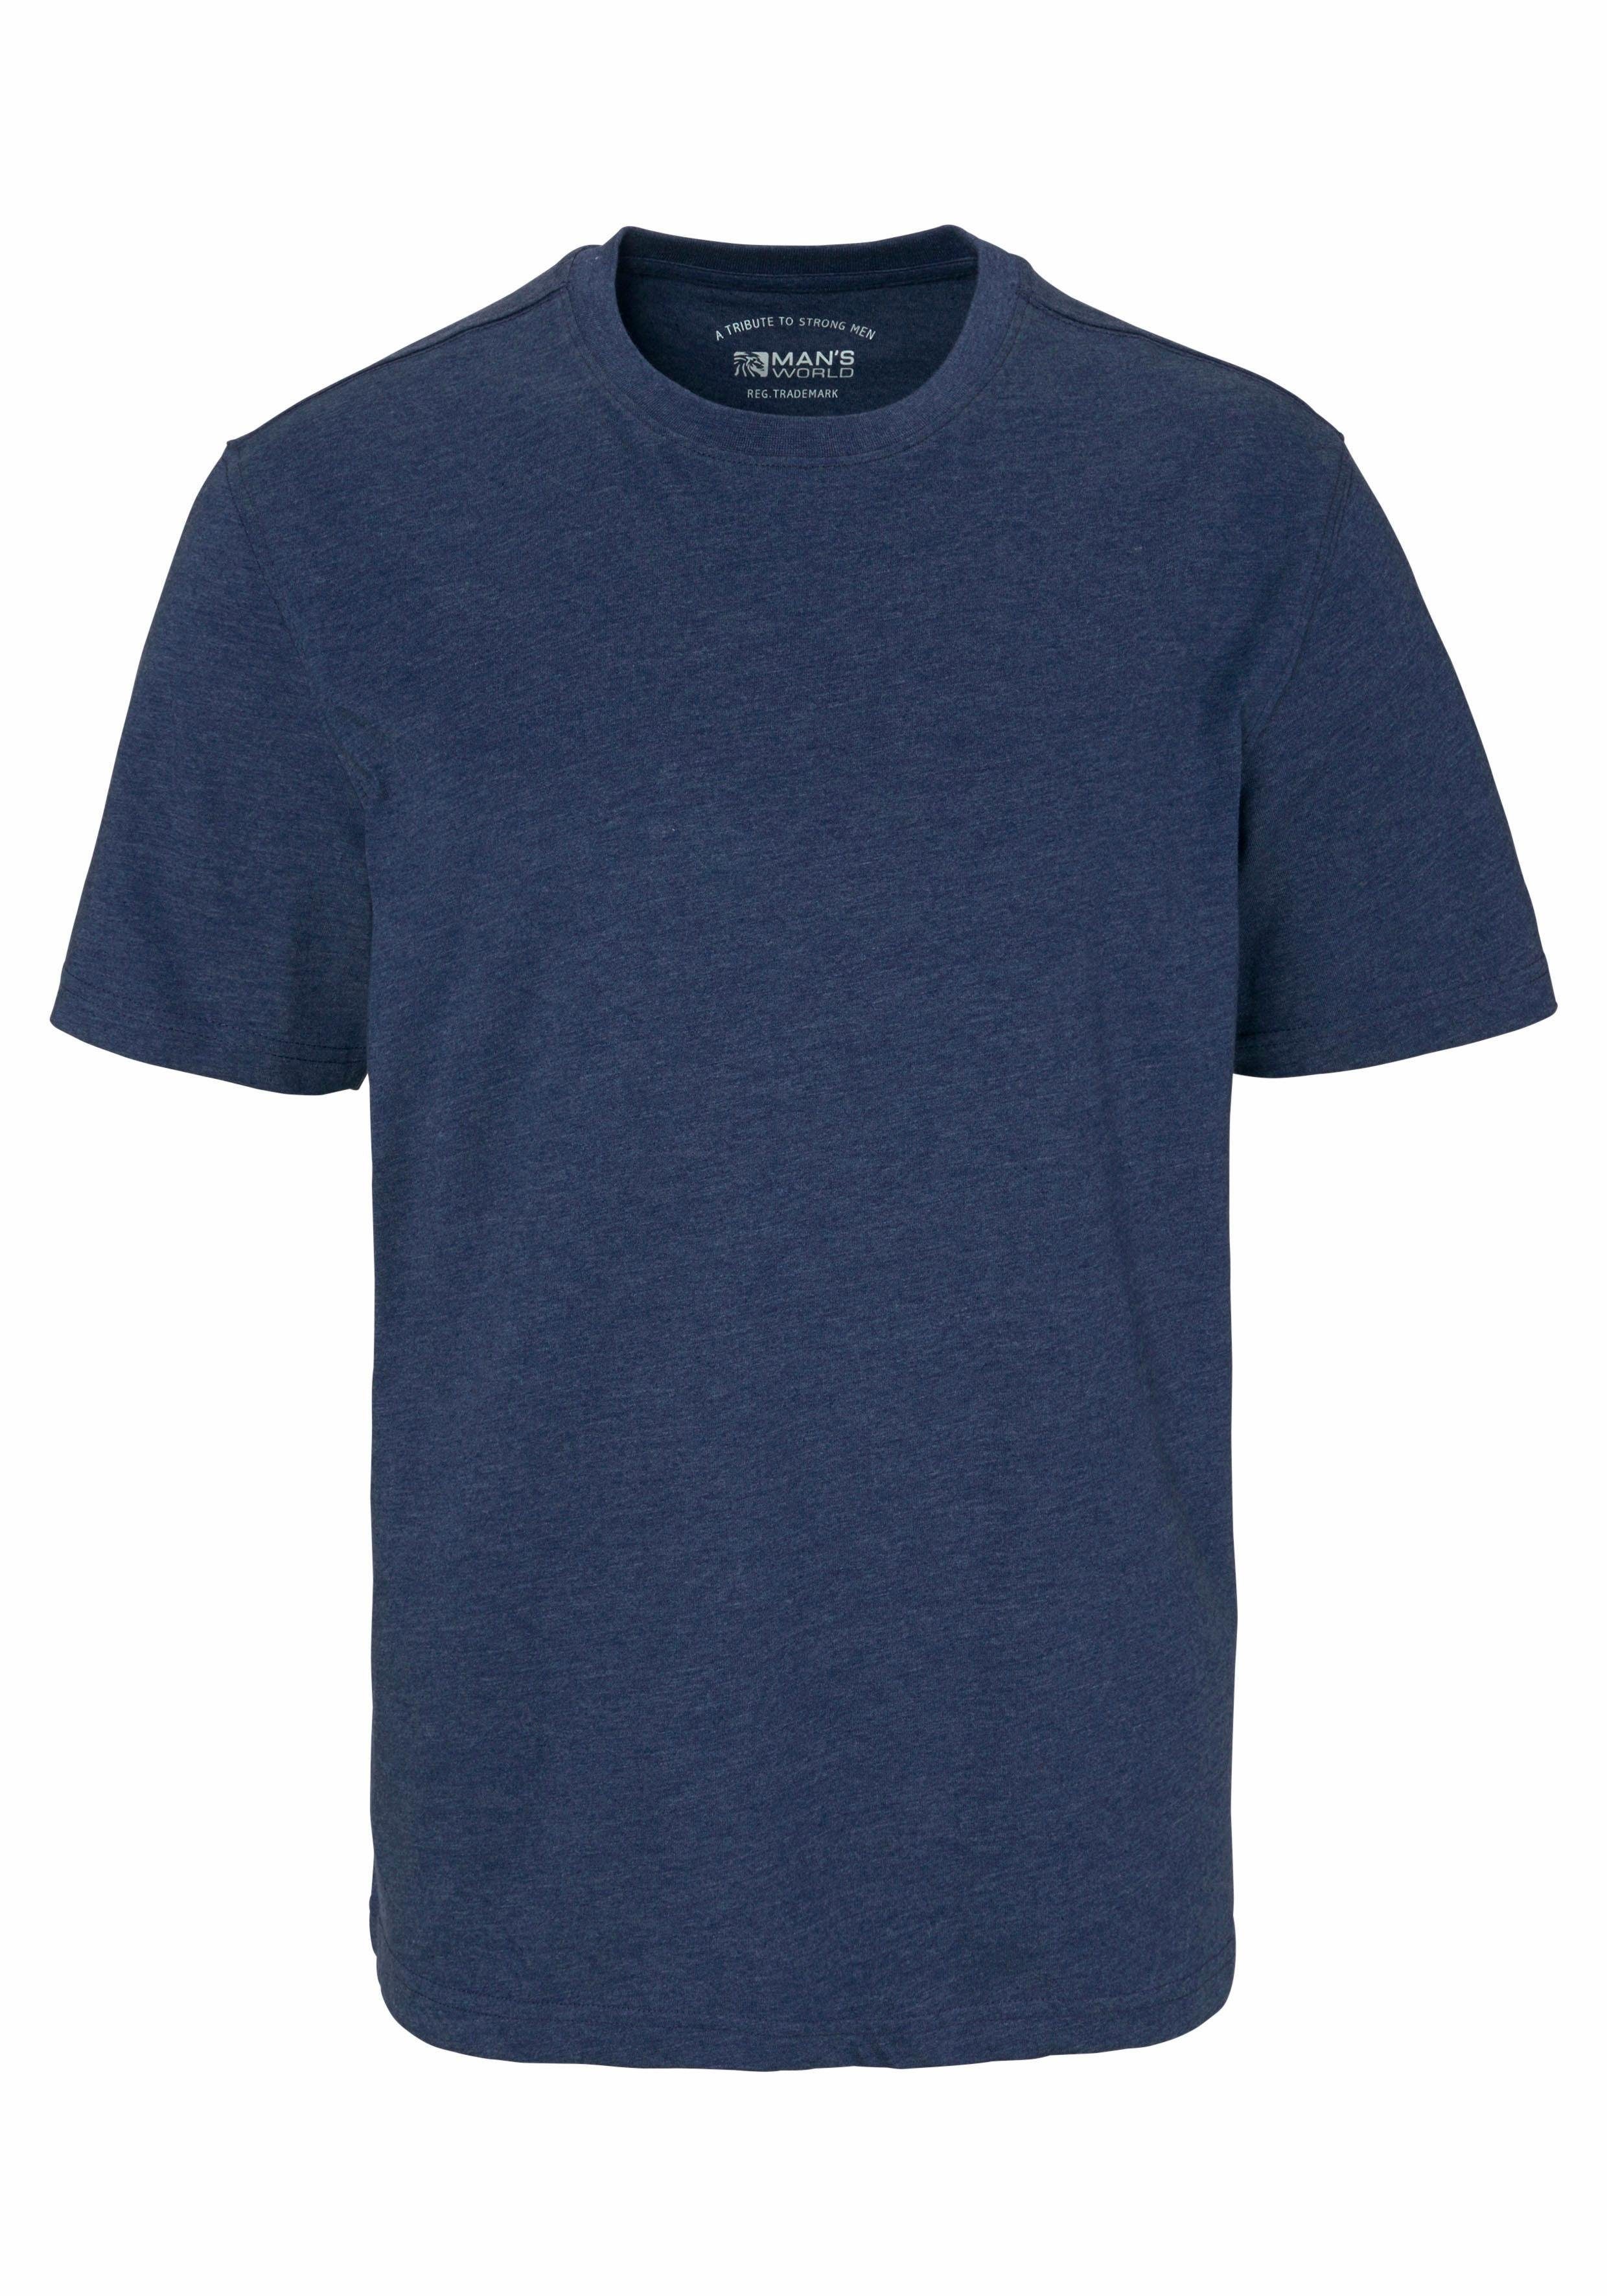 Herren Shirts Man's World T-Shirt (Packung, 2-tlg., 2er-Pack) aus Baumwollmischung